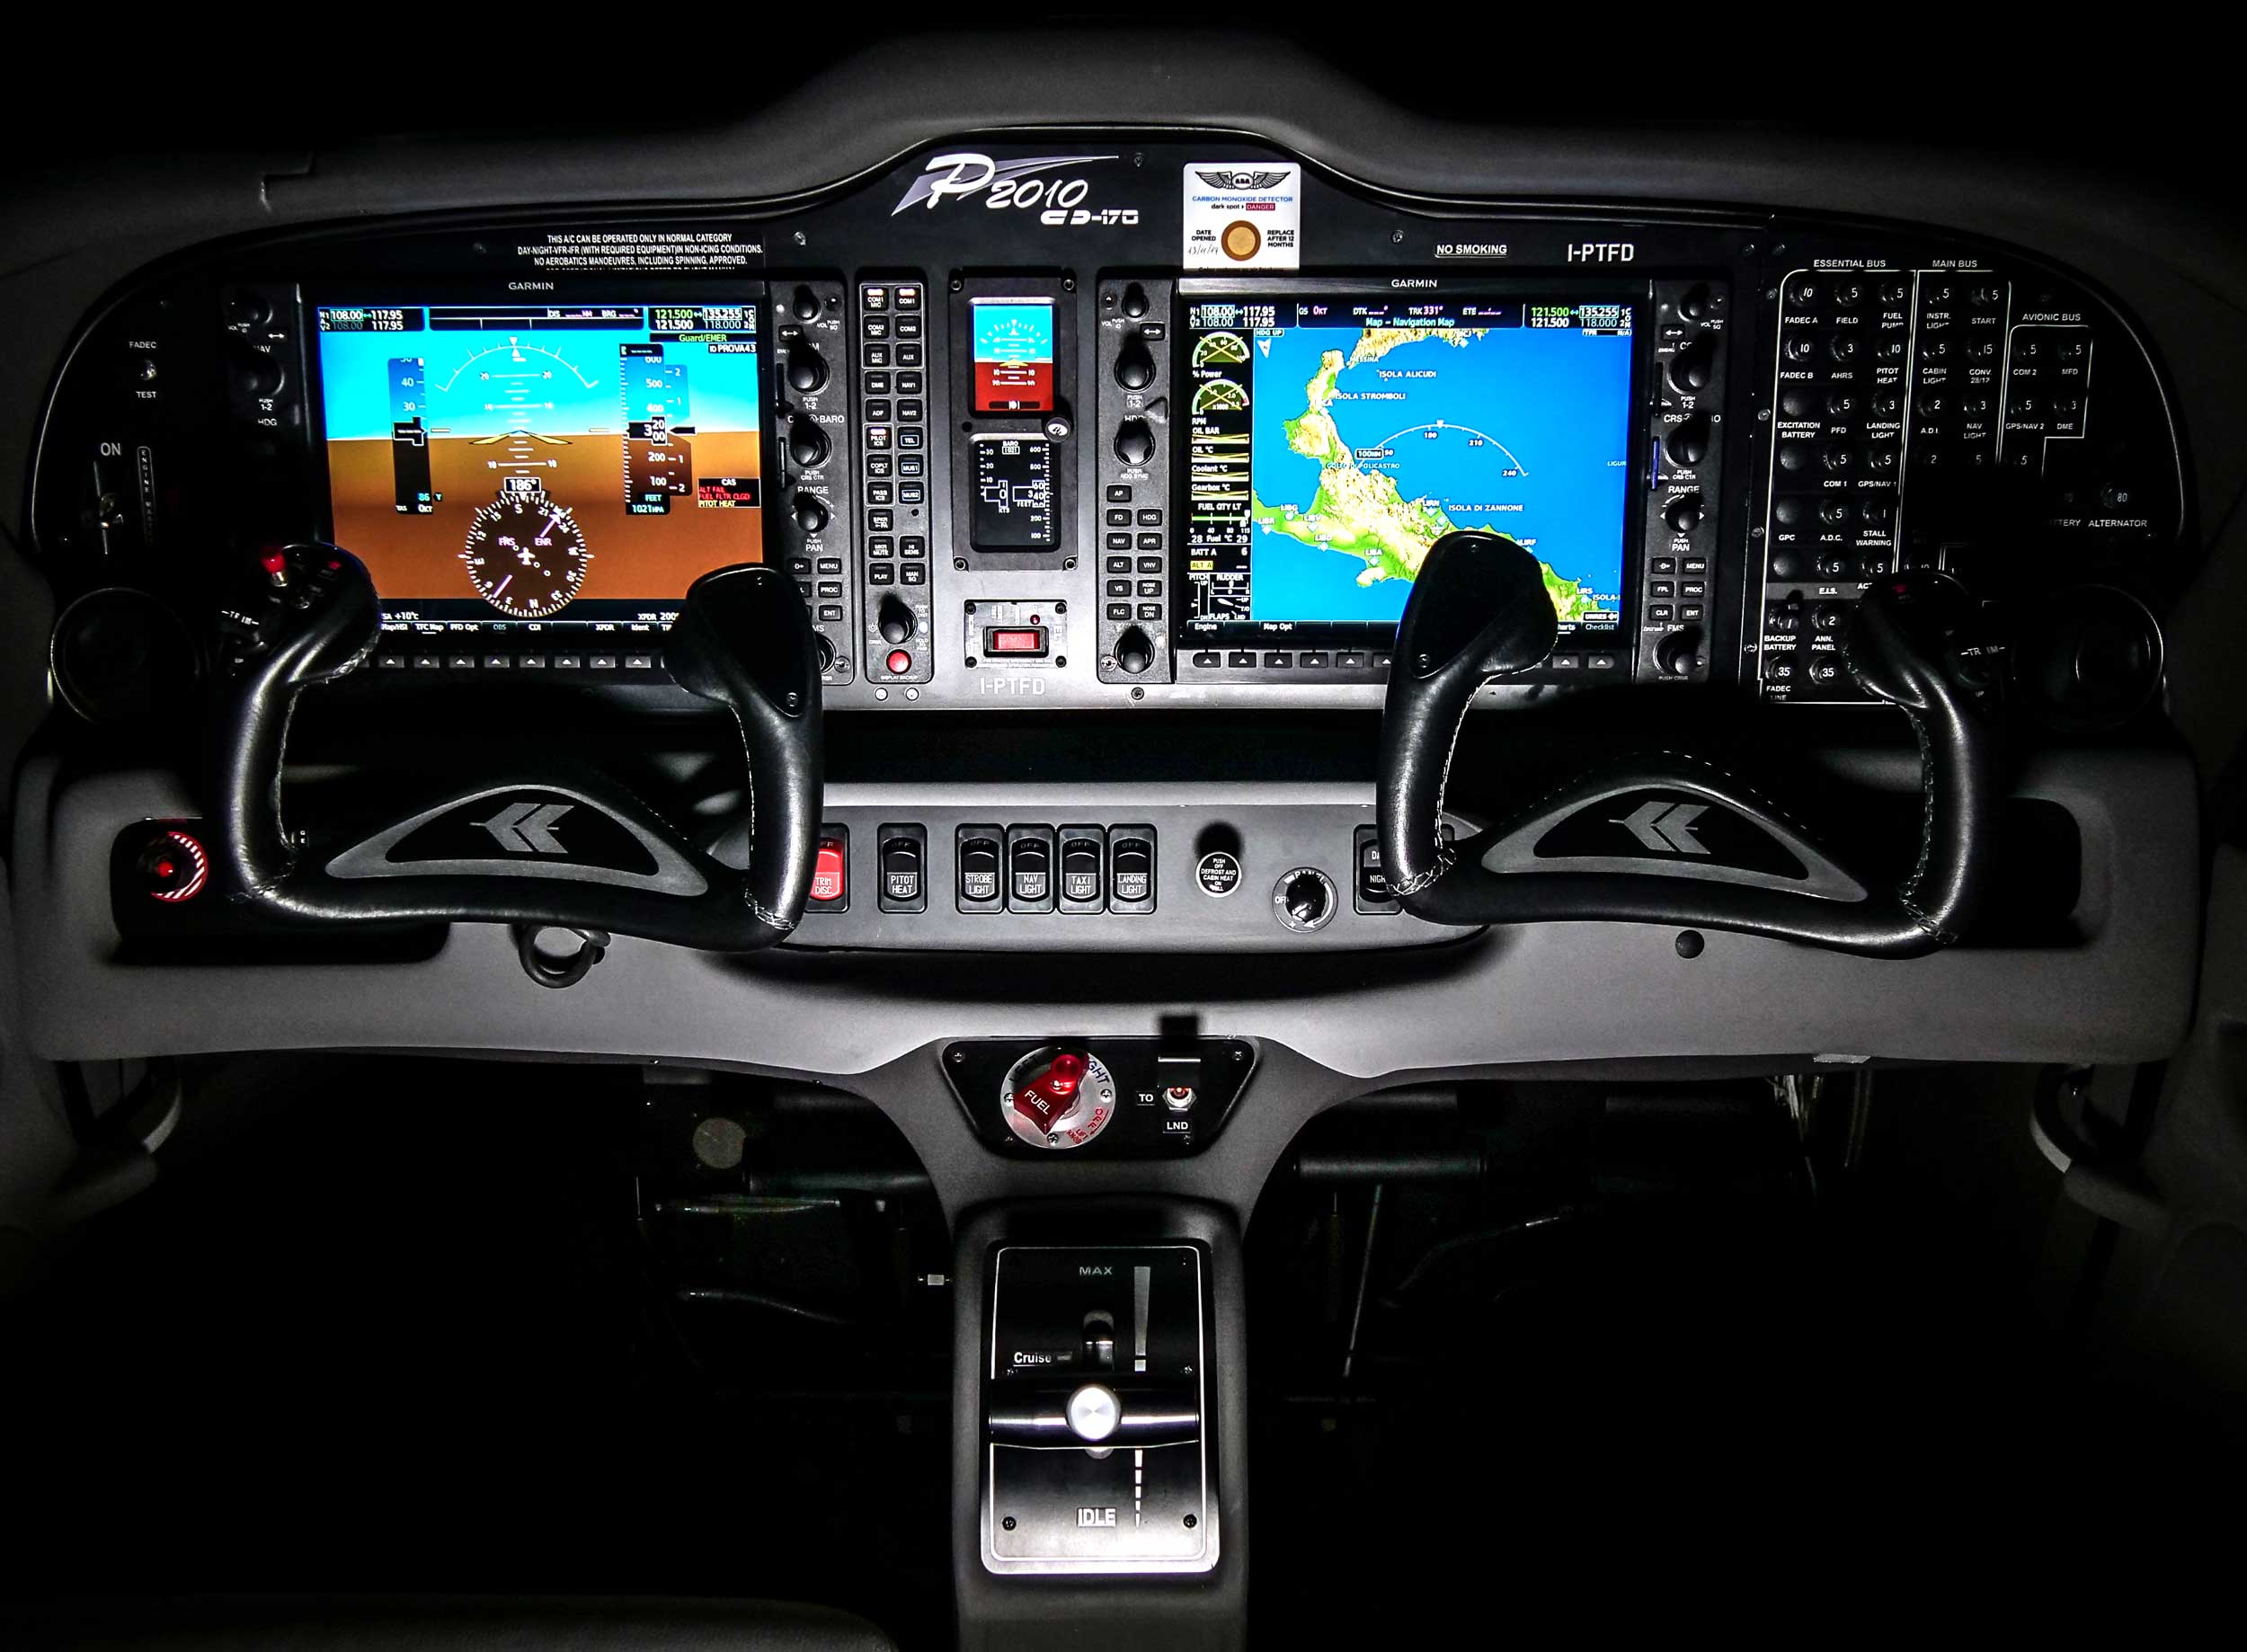 Tecnbam P2010 cockpit